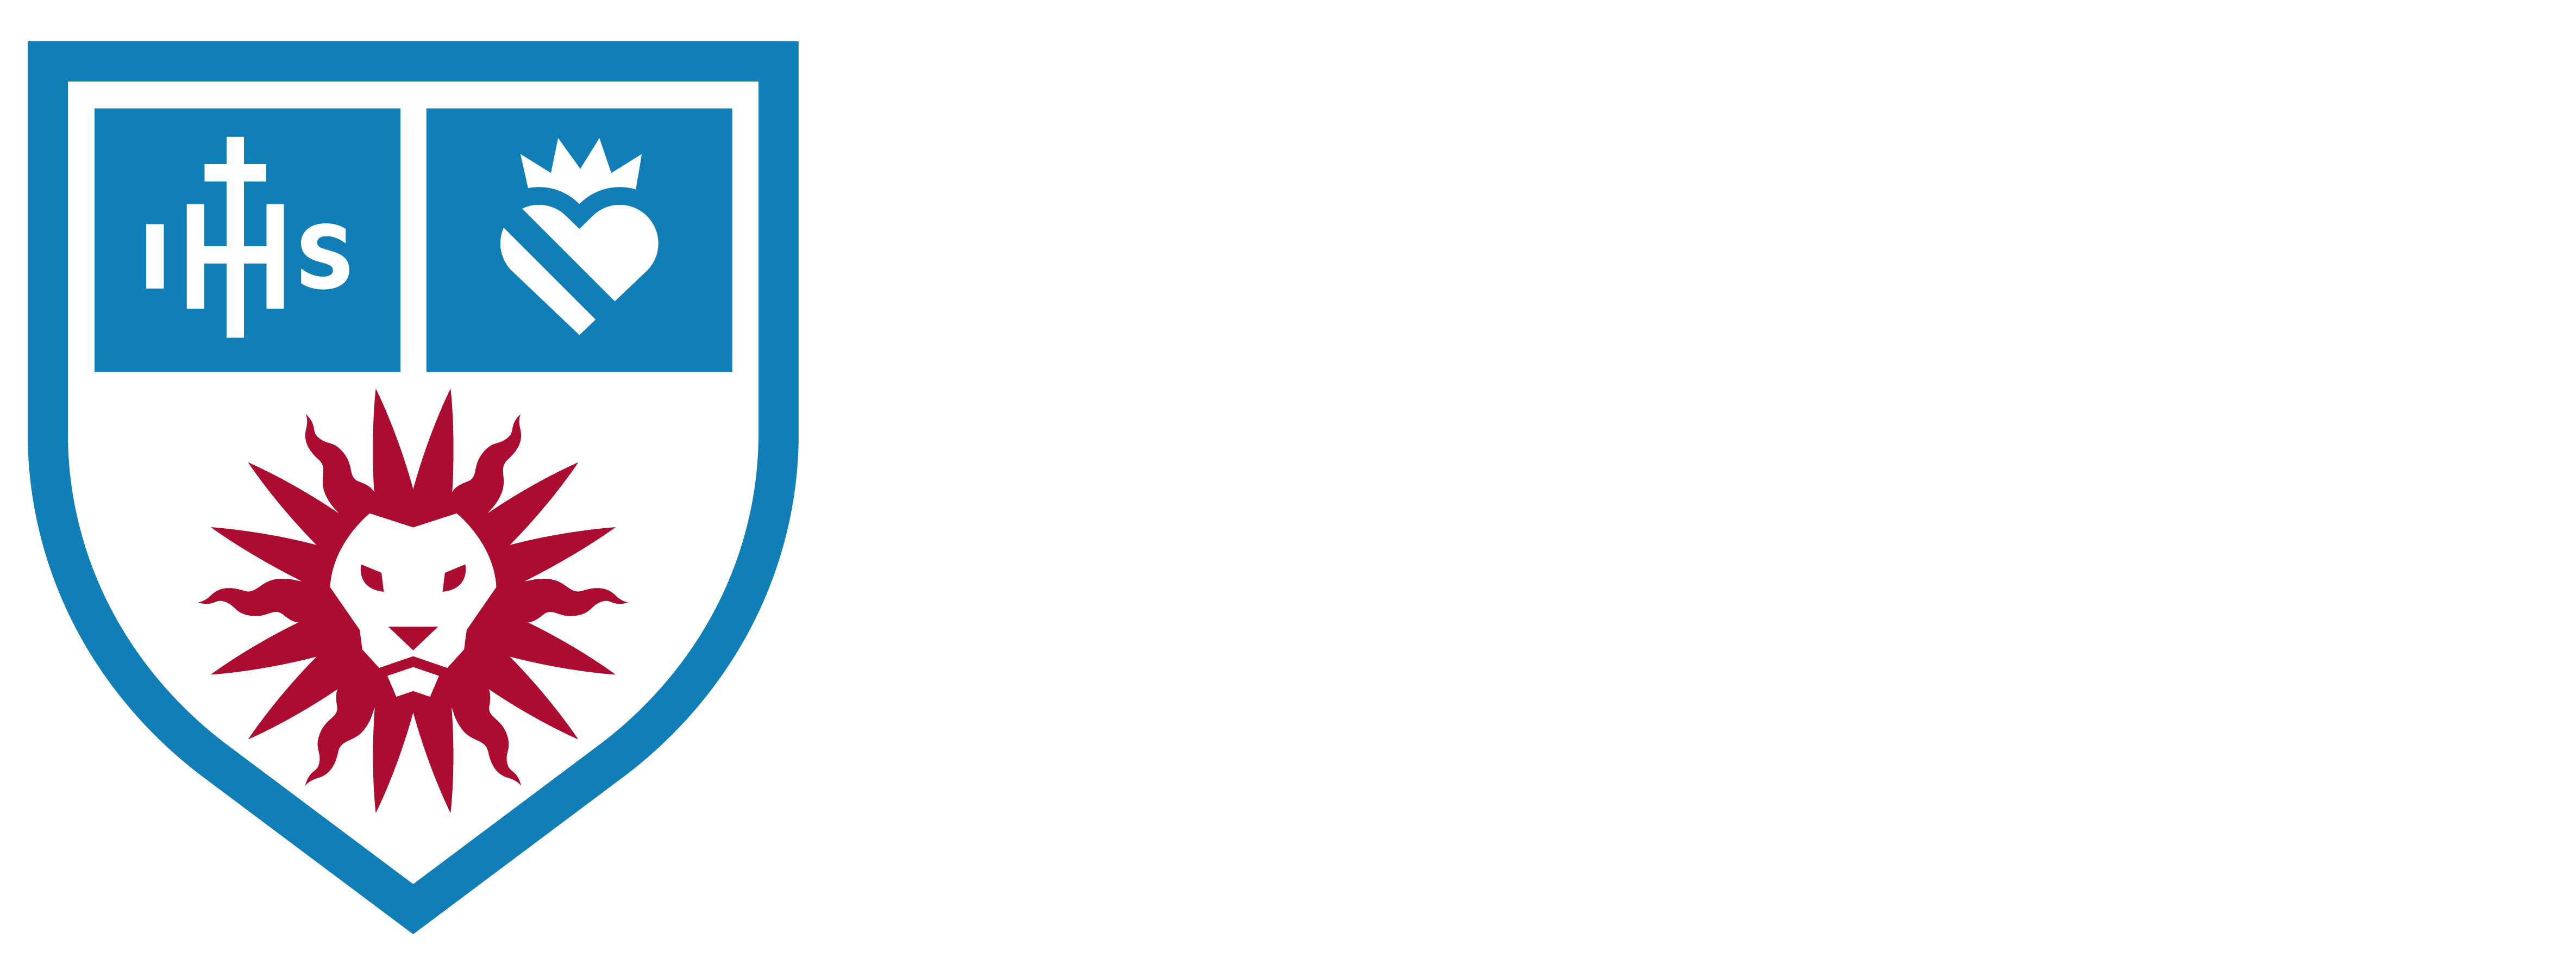 Loyola Law School - Loyola Marymount University